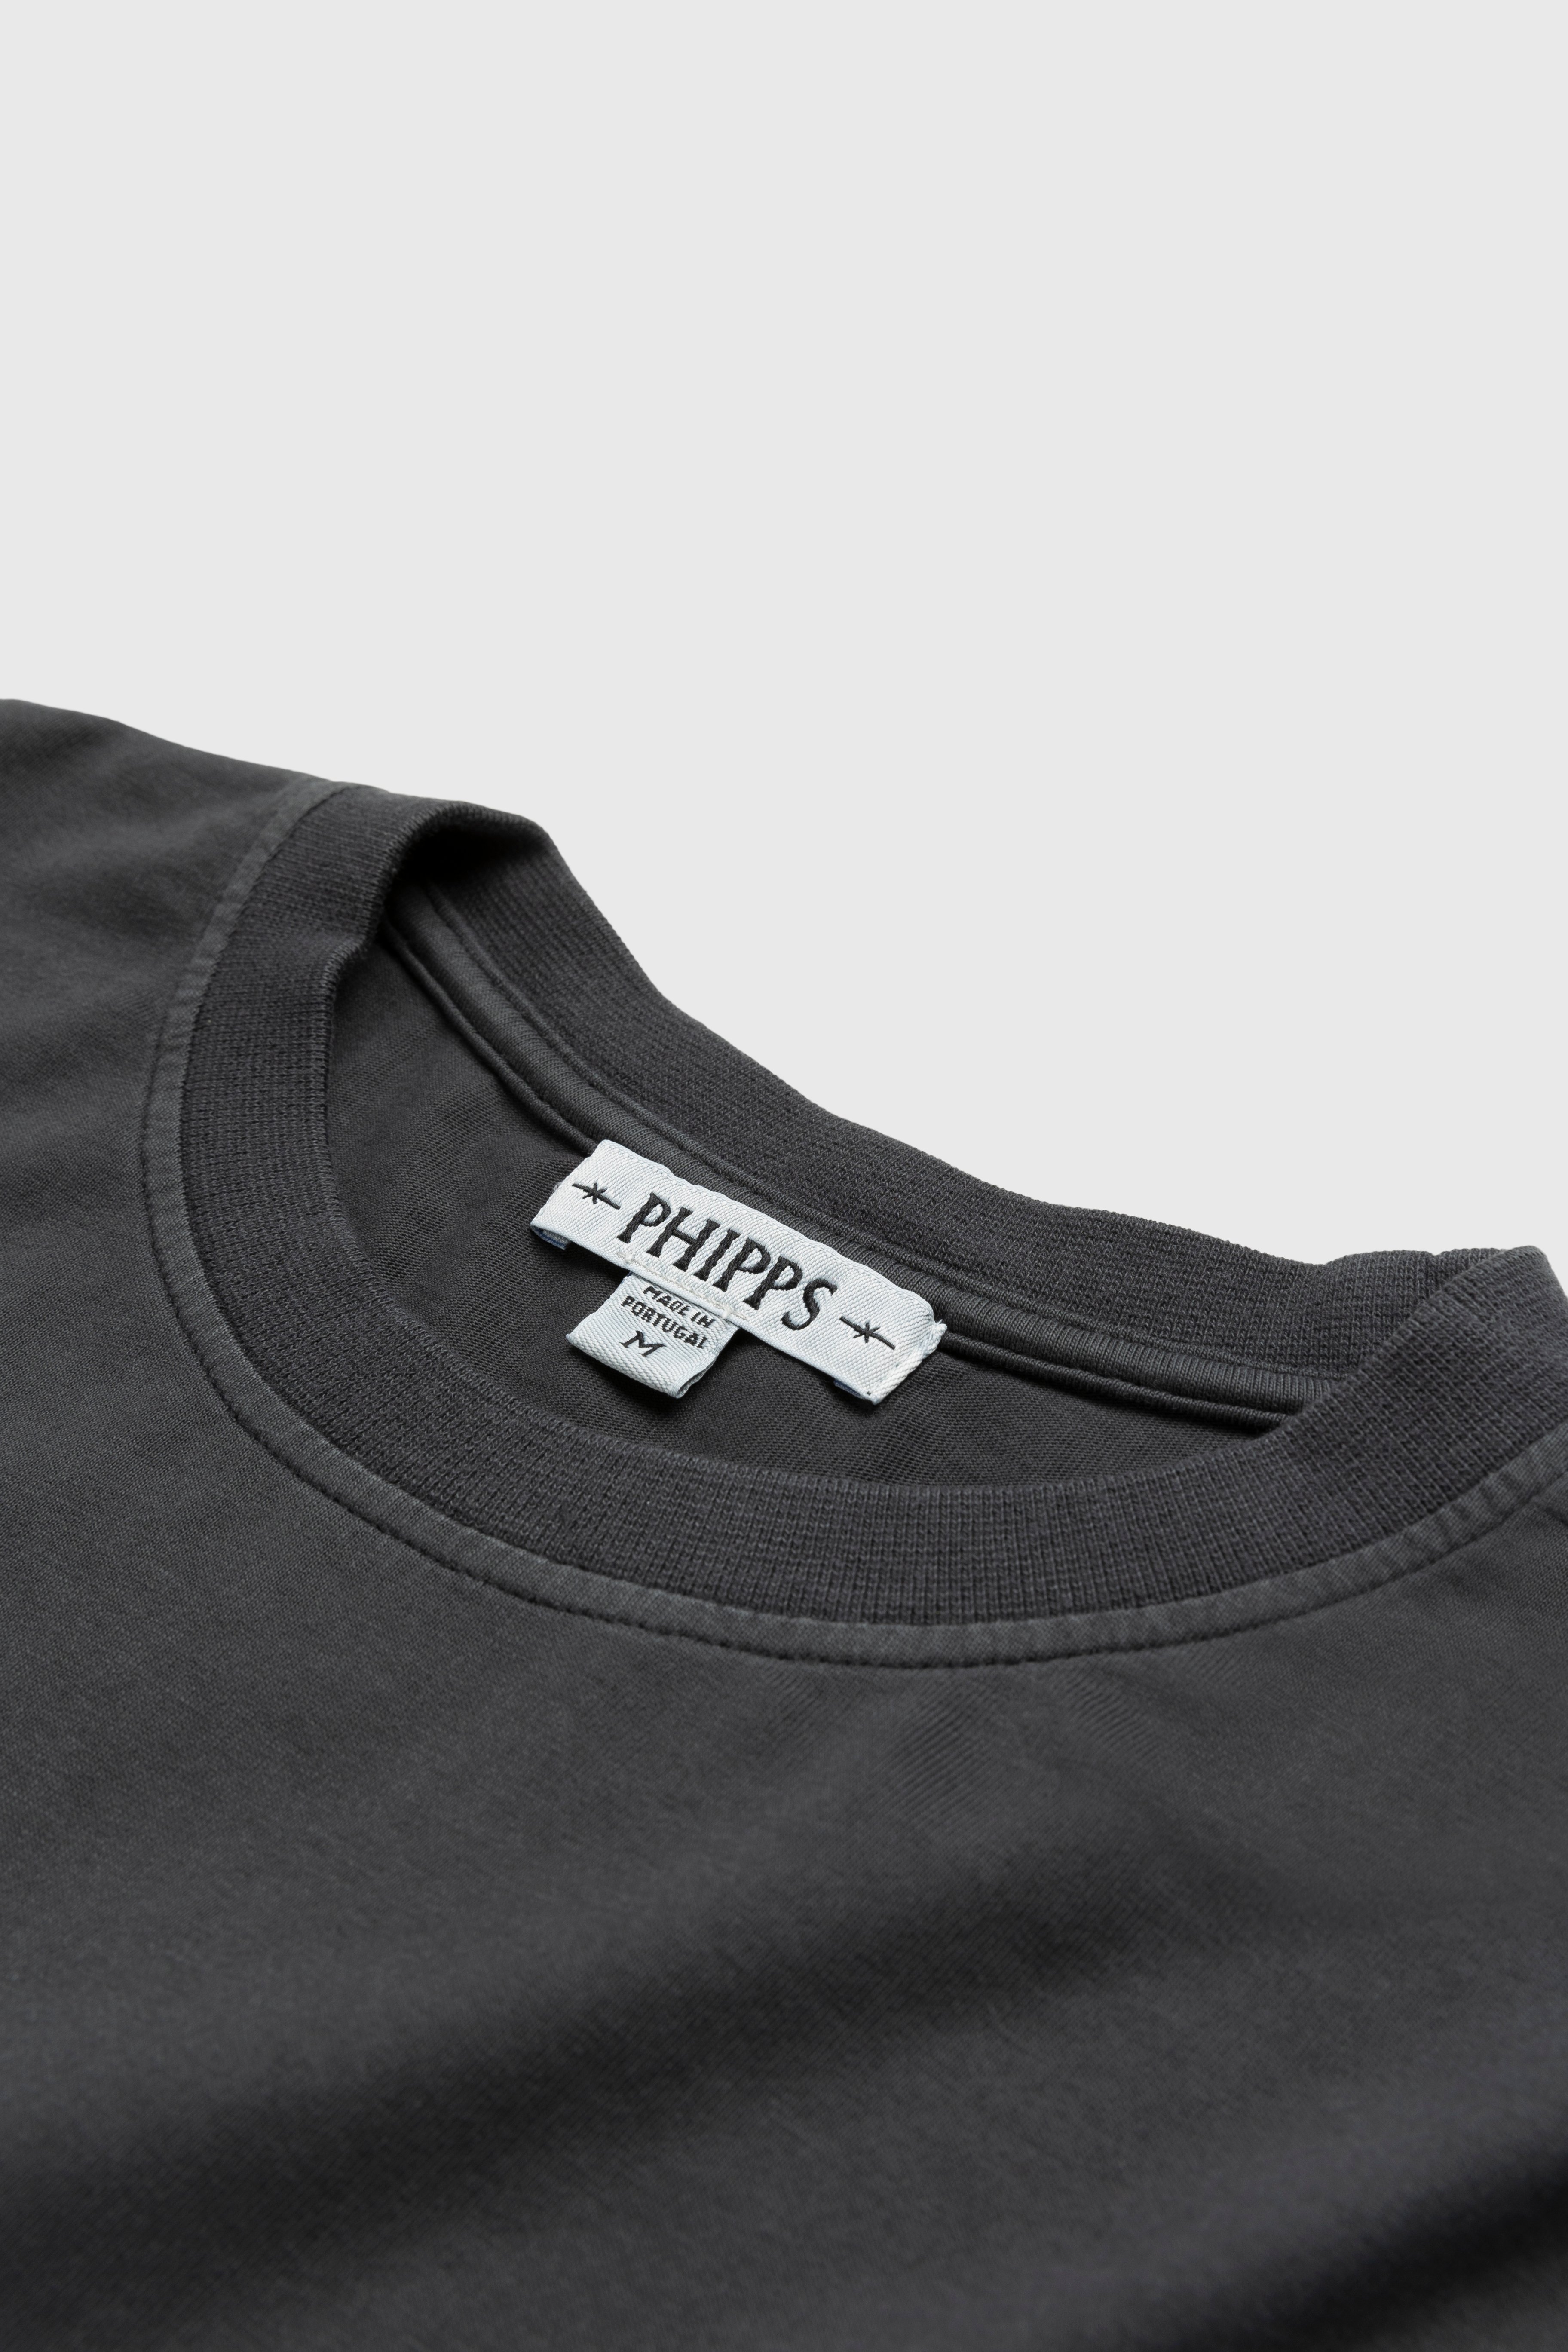 Phipps - Classic Logo T-Shirt Black - Clothing - Black - Image 4